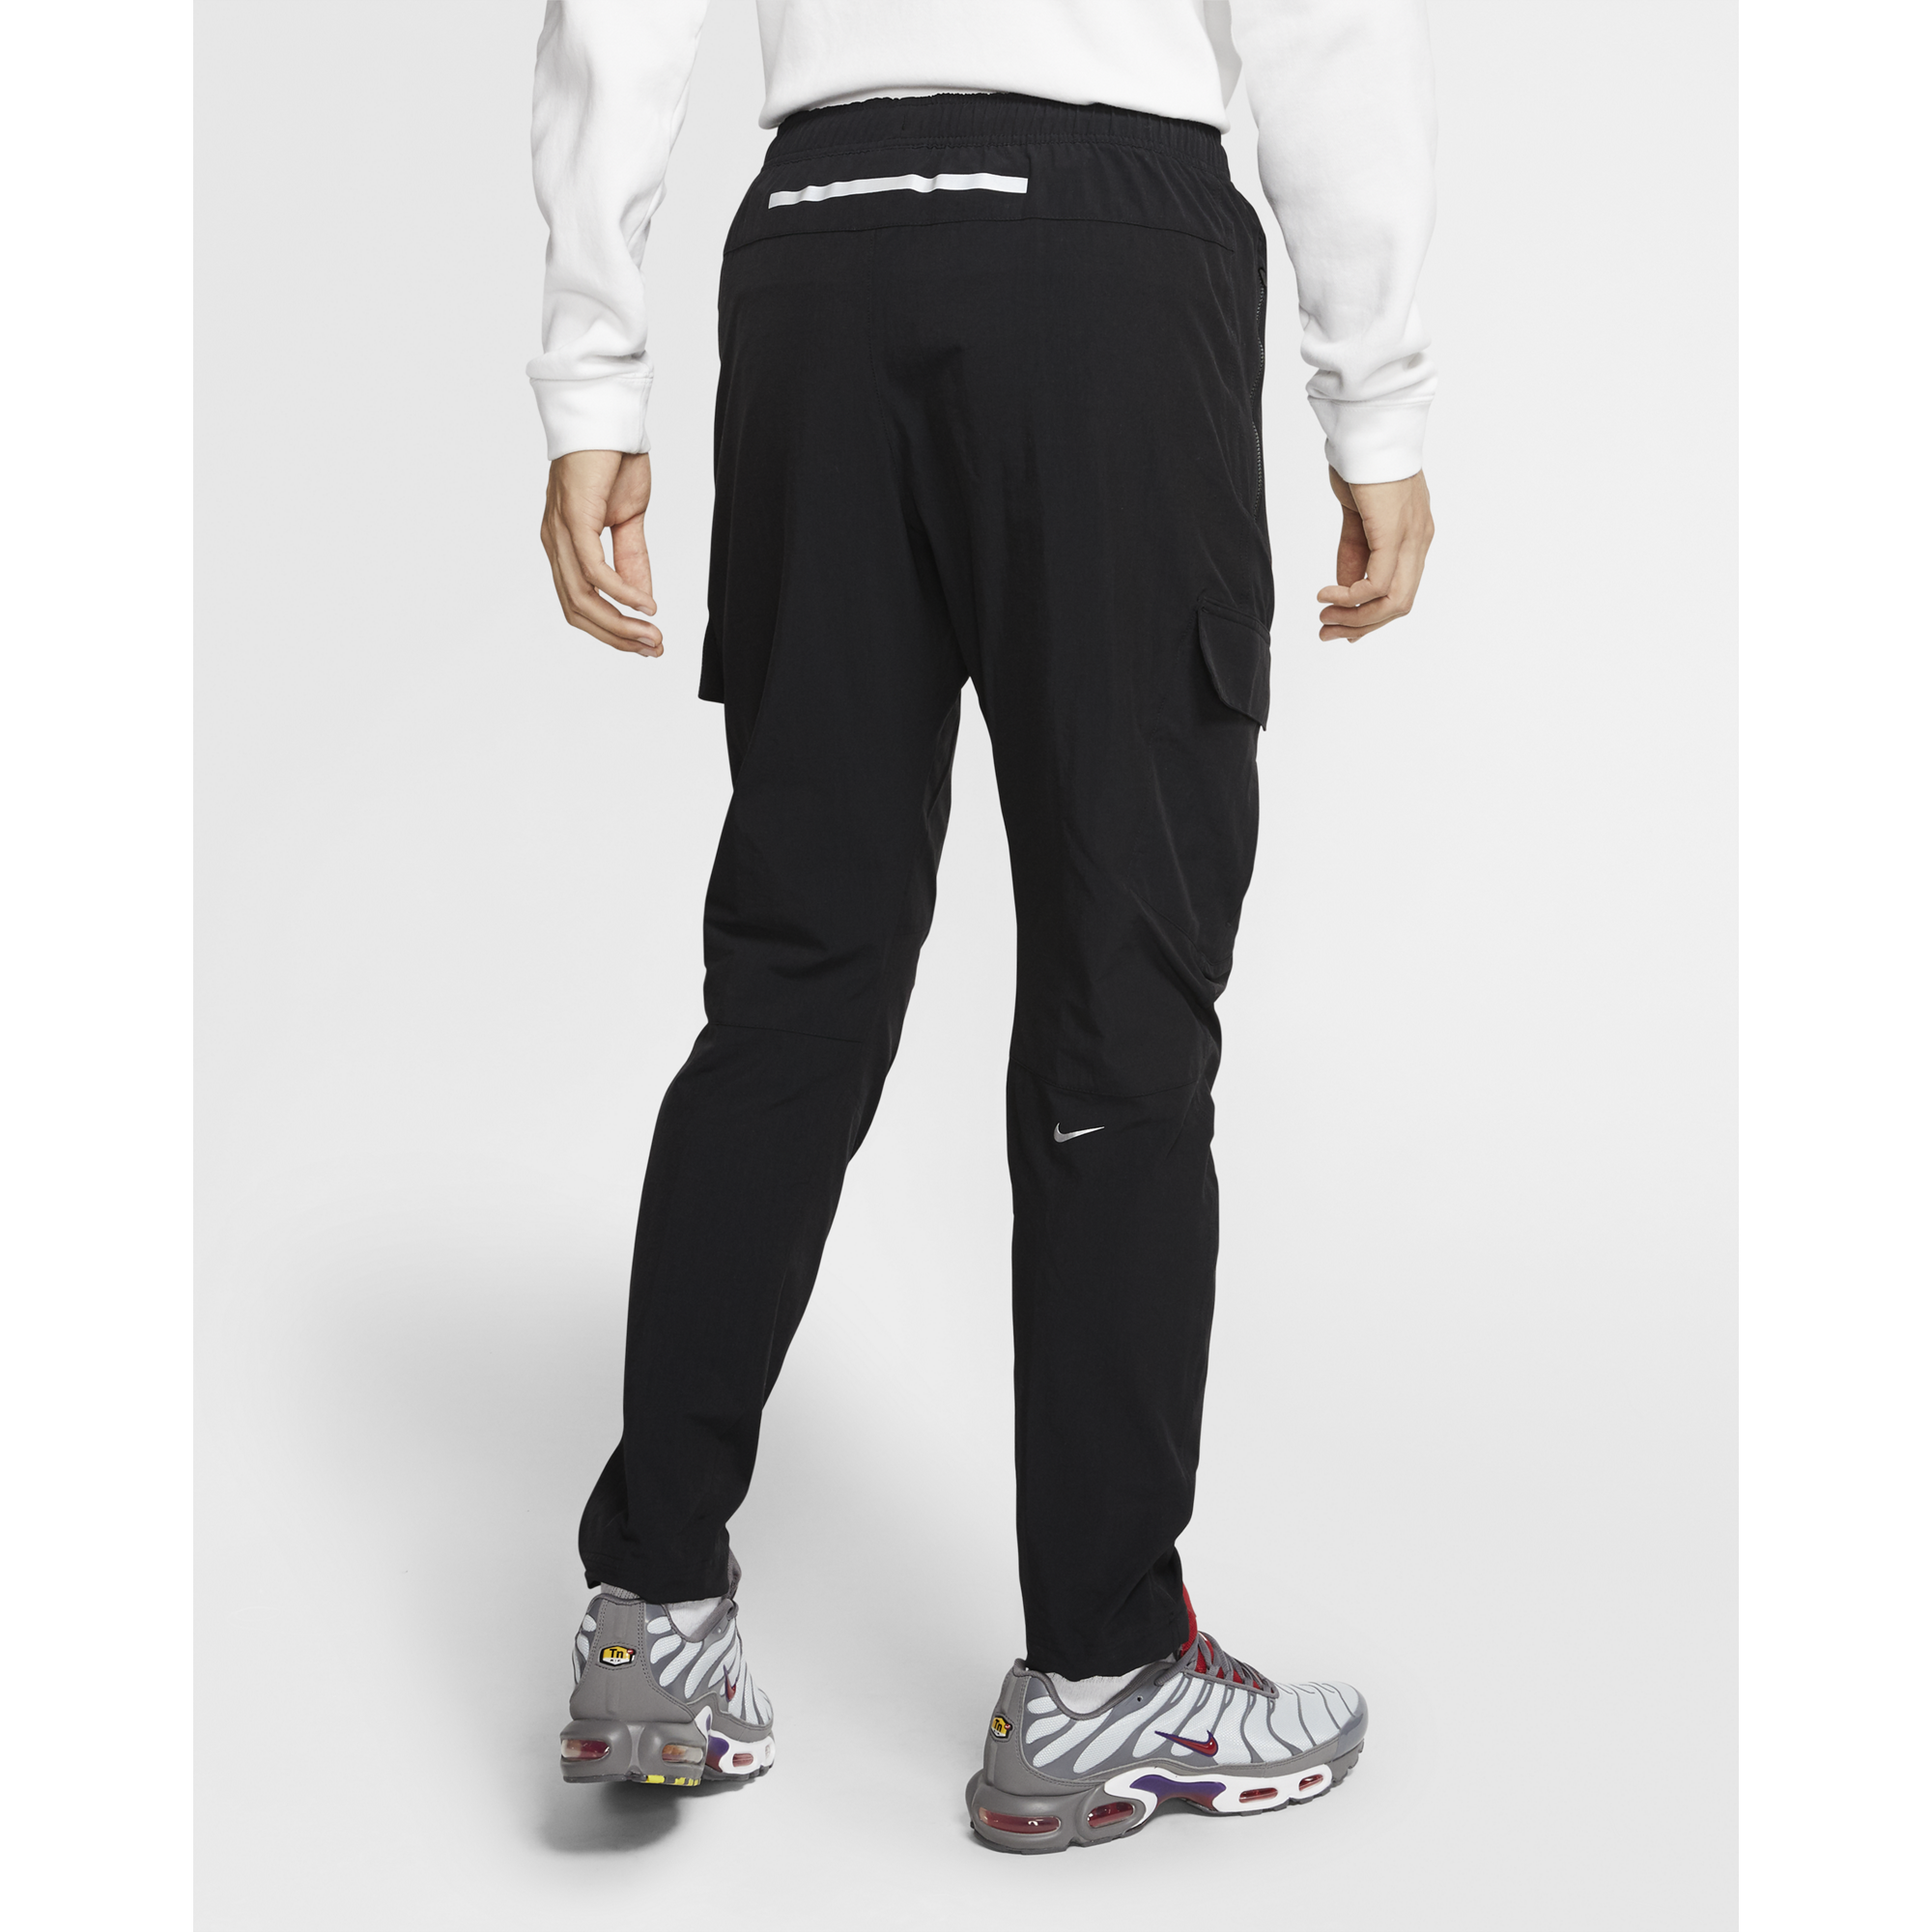 Nike Reflective Swoosh Woven Pant 